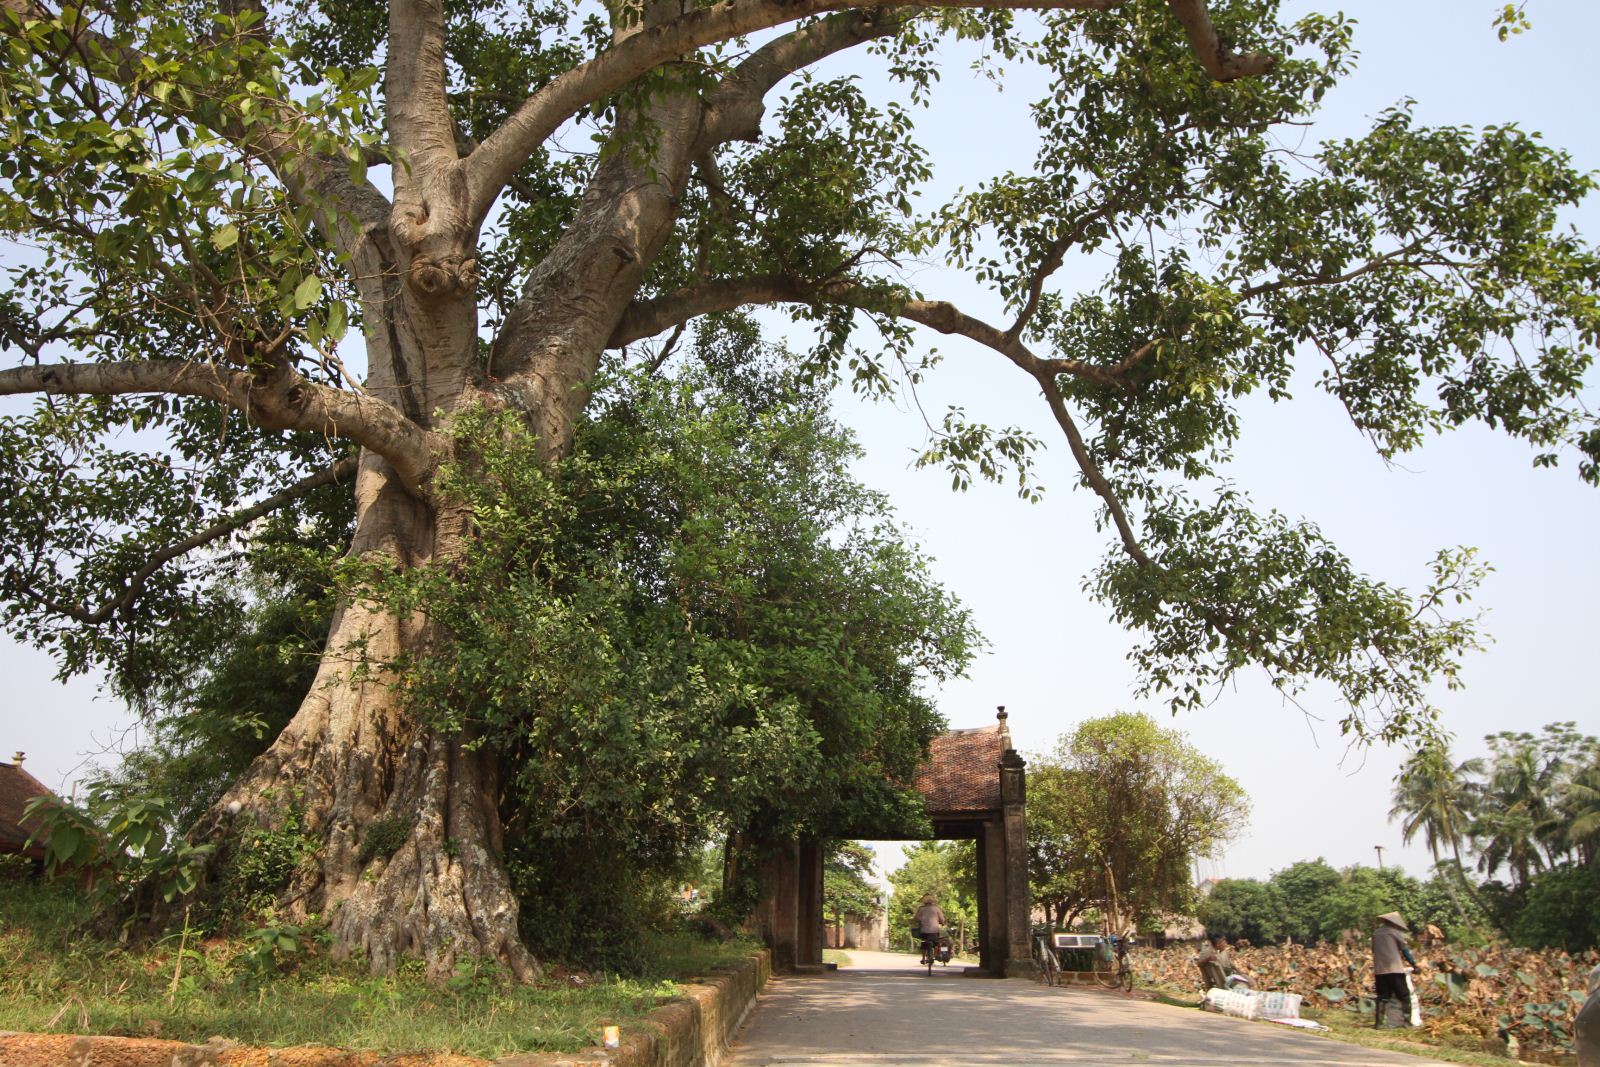 Mong Phu village gate